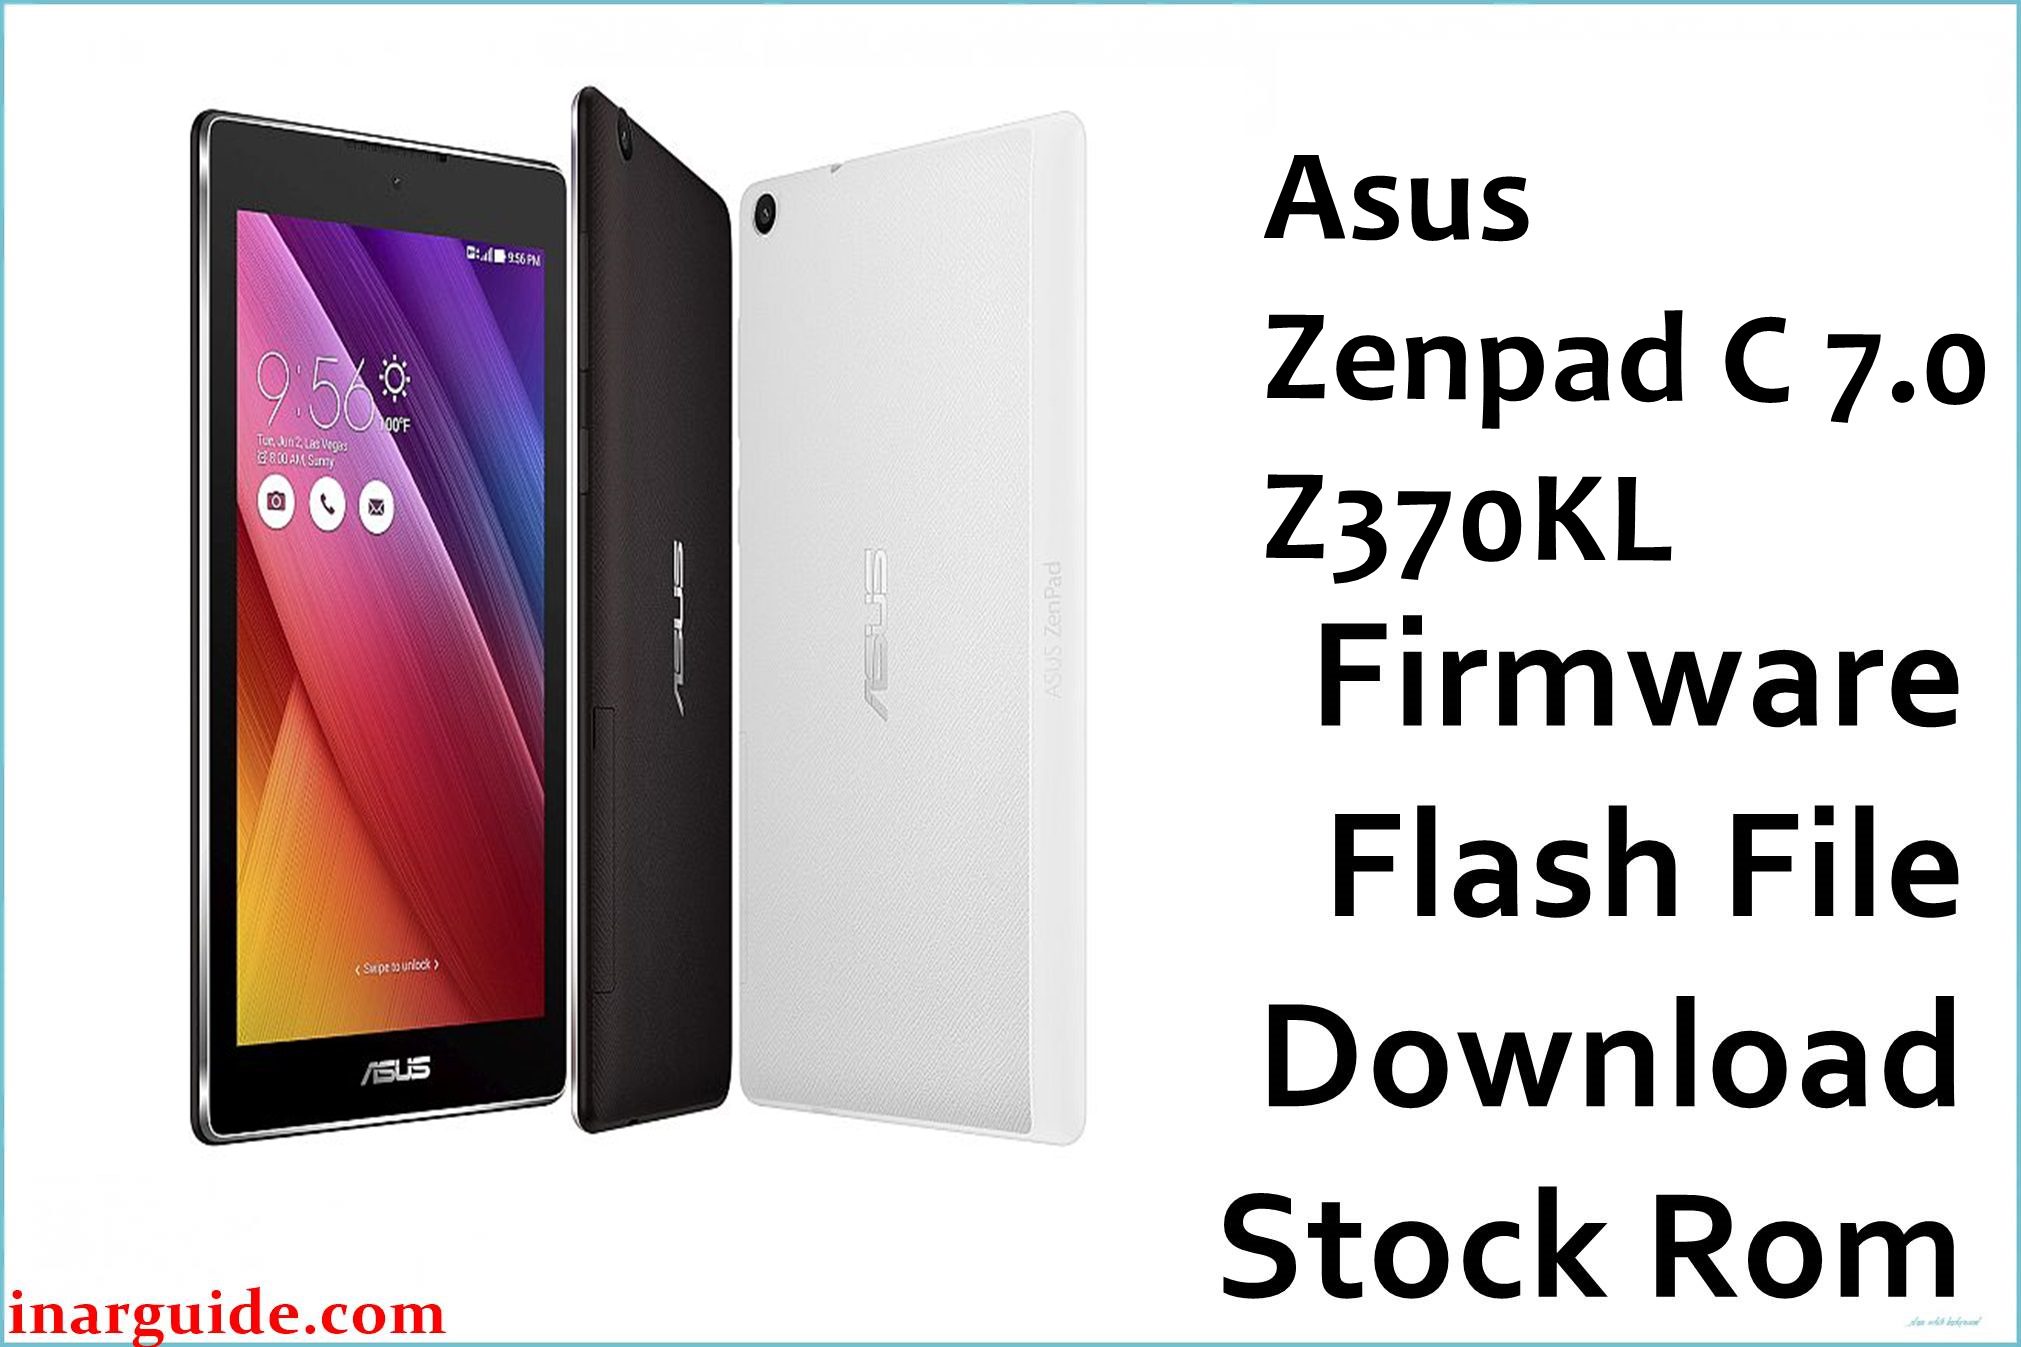 Asus Zenpad C 7.0 Z370KL